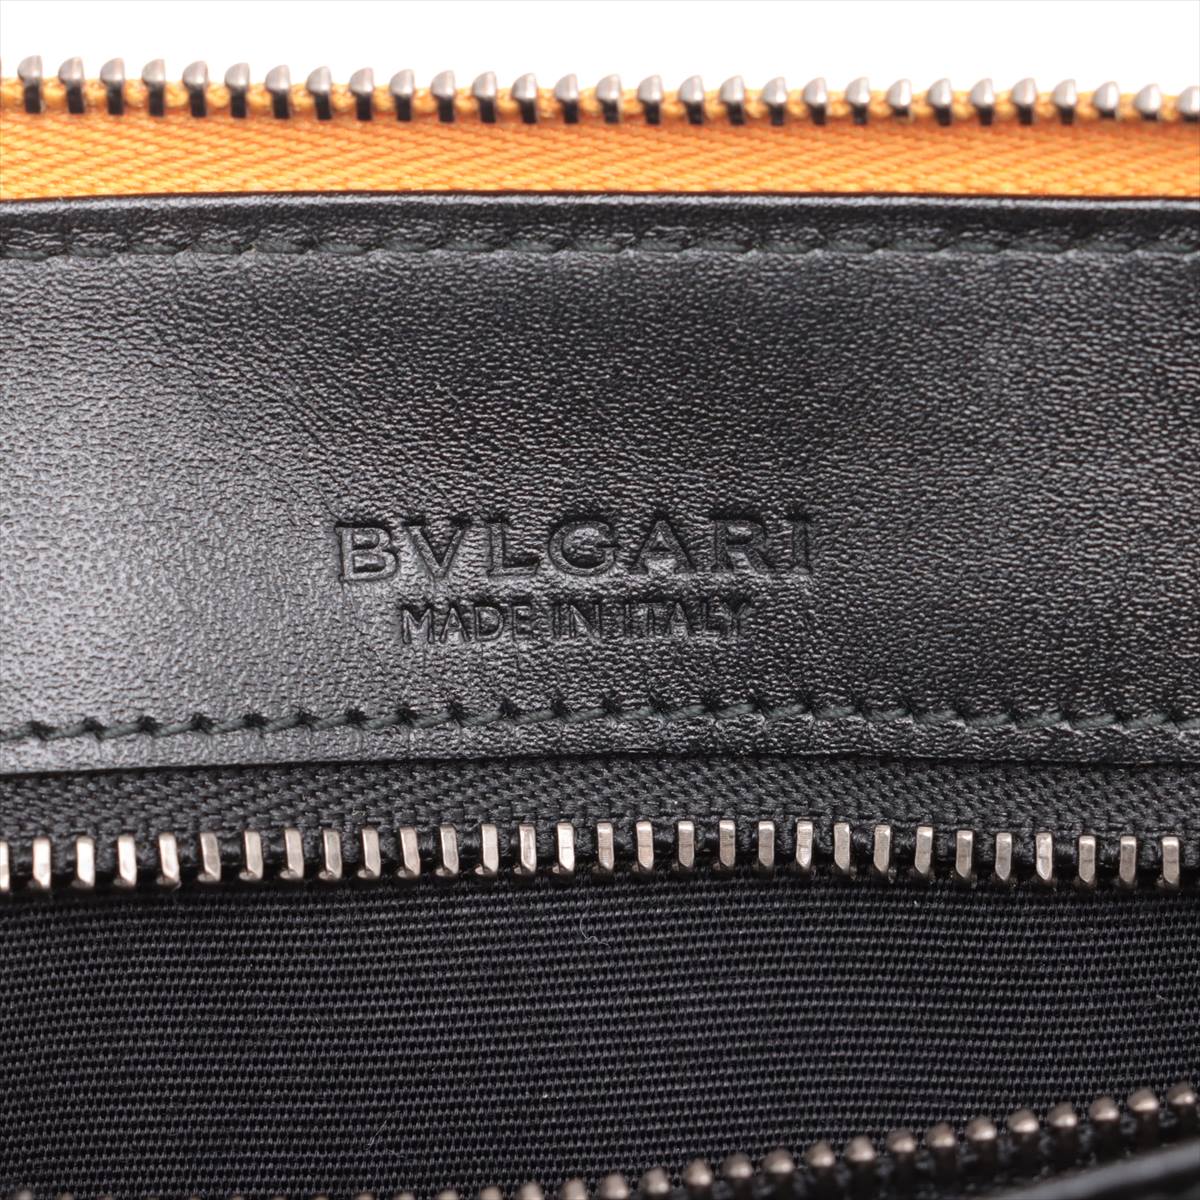 Bulgari Leather Clutch Bag Black X Yellow